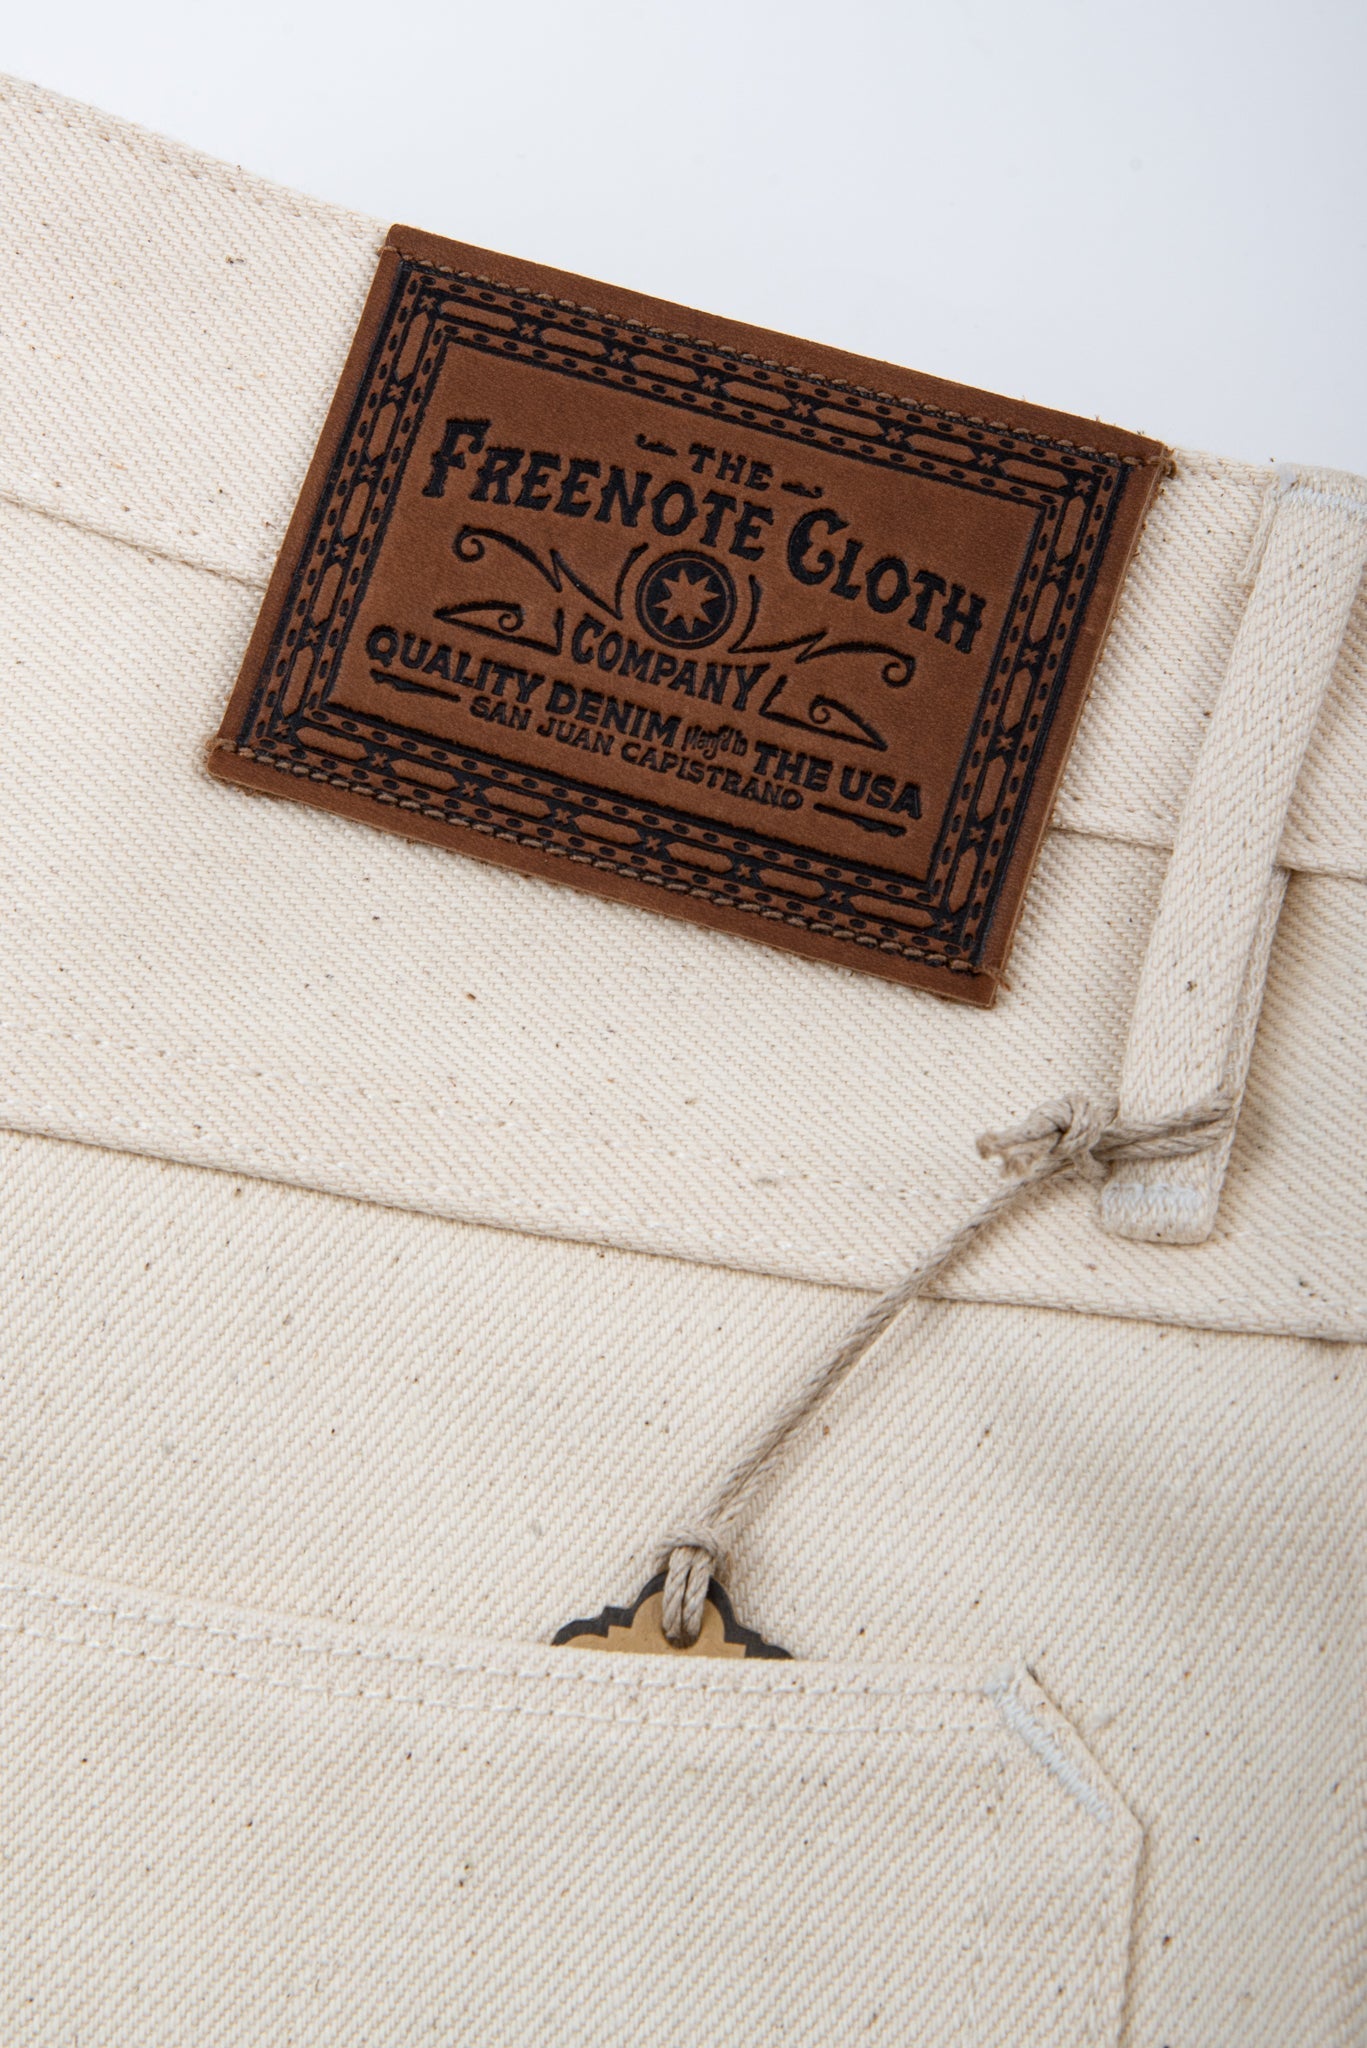 Freenote Cloth - Belford Straight 14oz Ecru Denim - City Workshop Men's Supply Co.